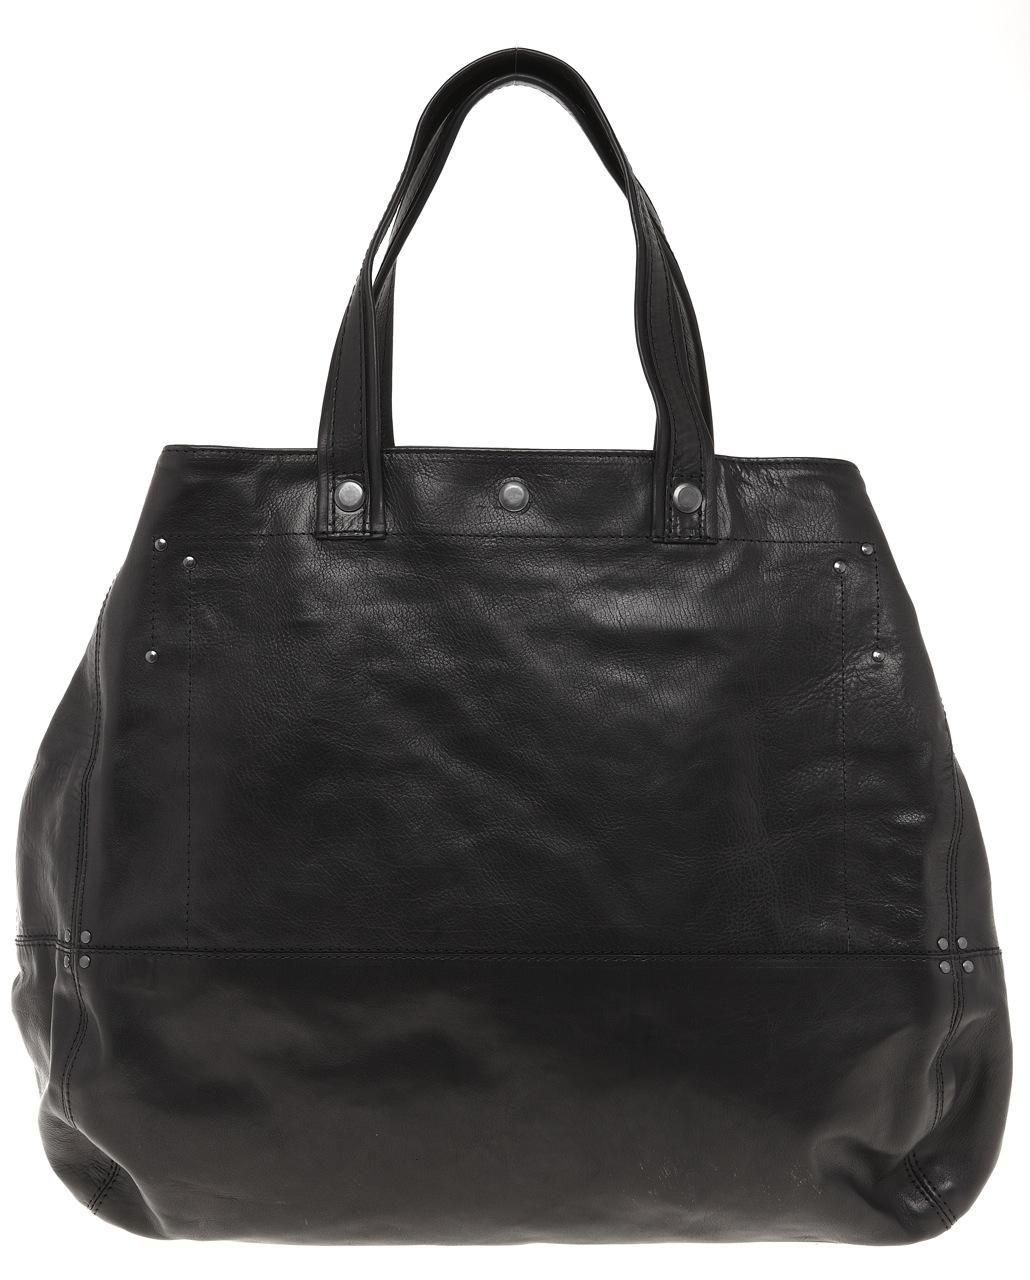 Jerome Dreyfuss Paris Large Billy Leather Bag $1200